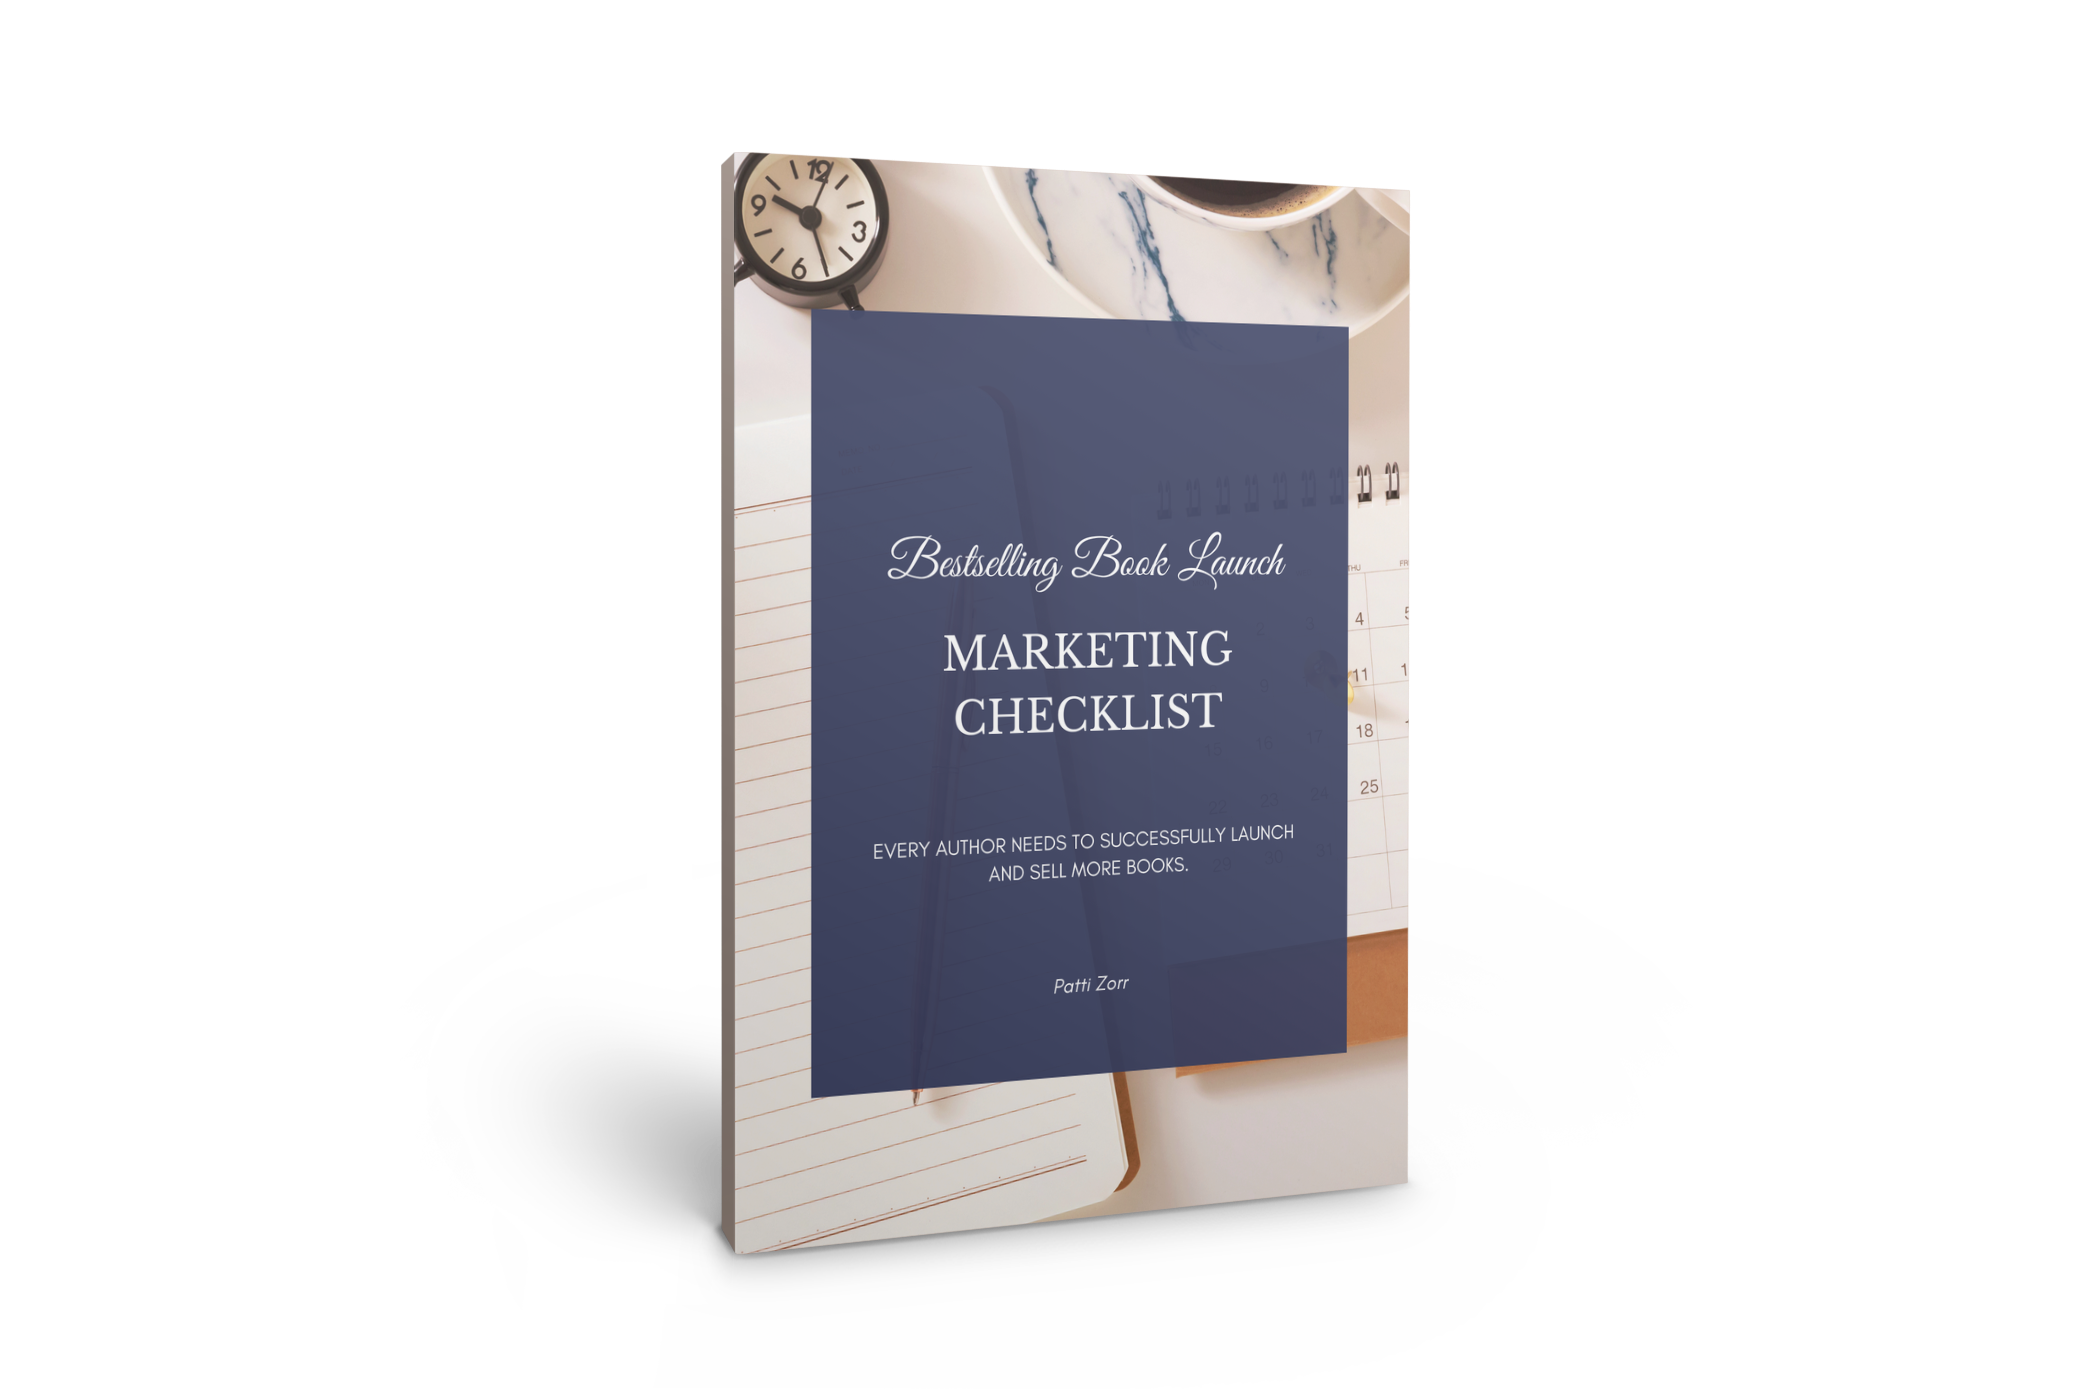 Bestselling Book Launch Marketing Checklist